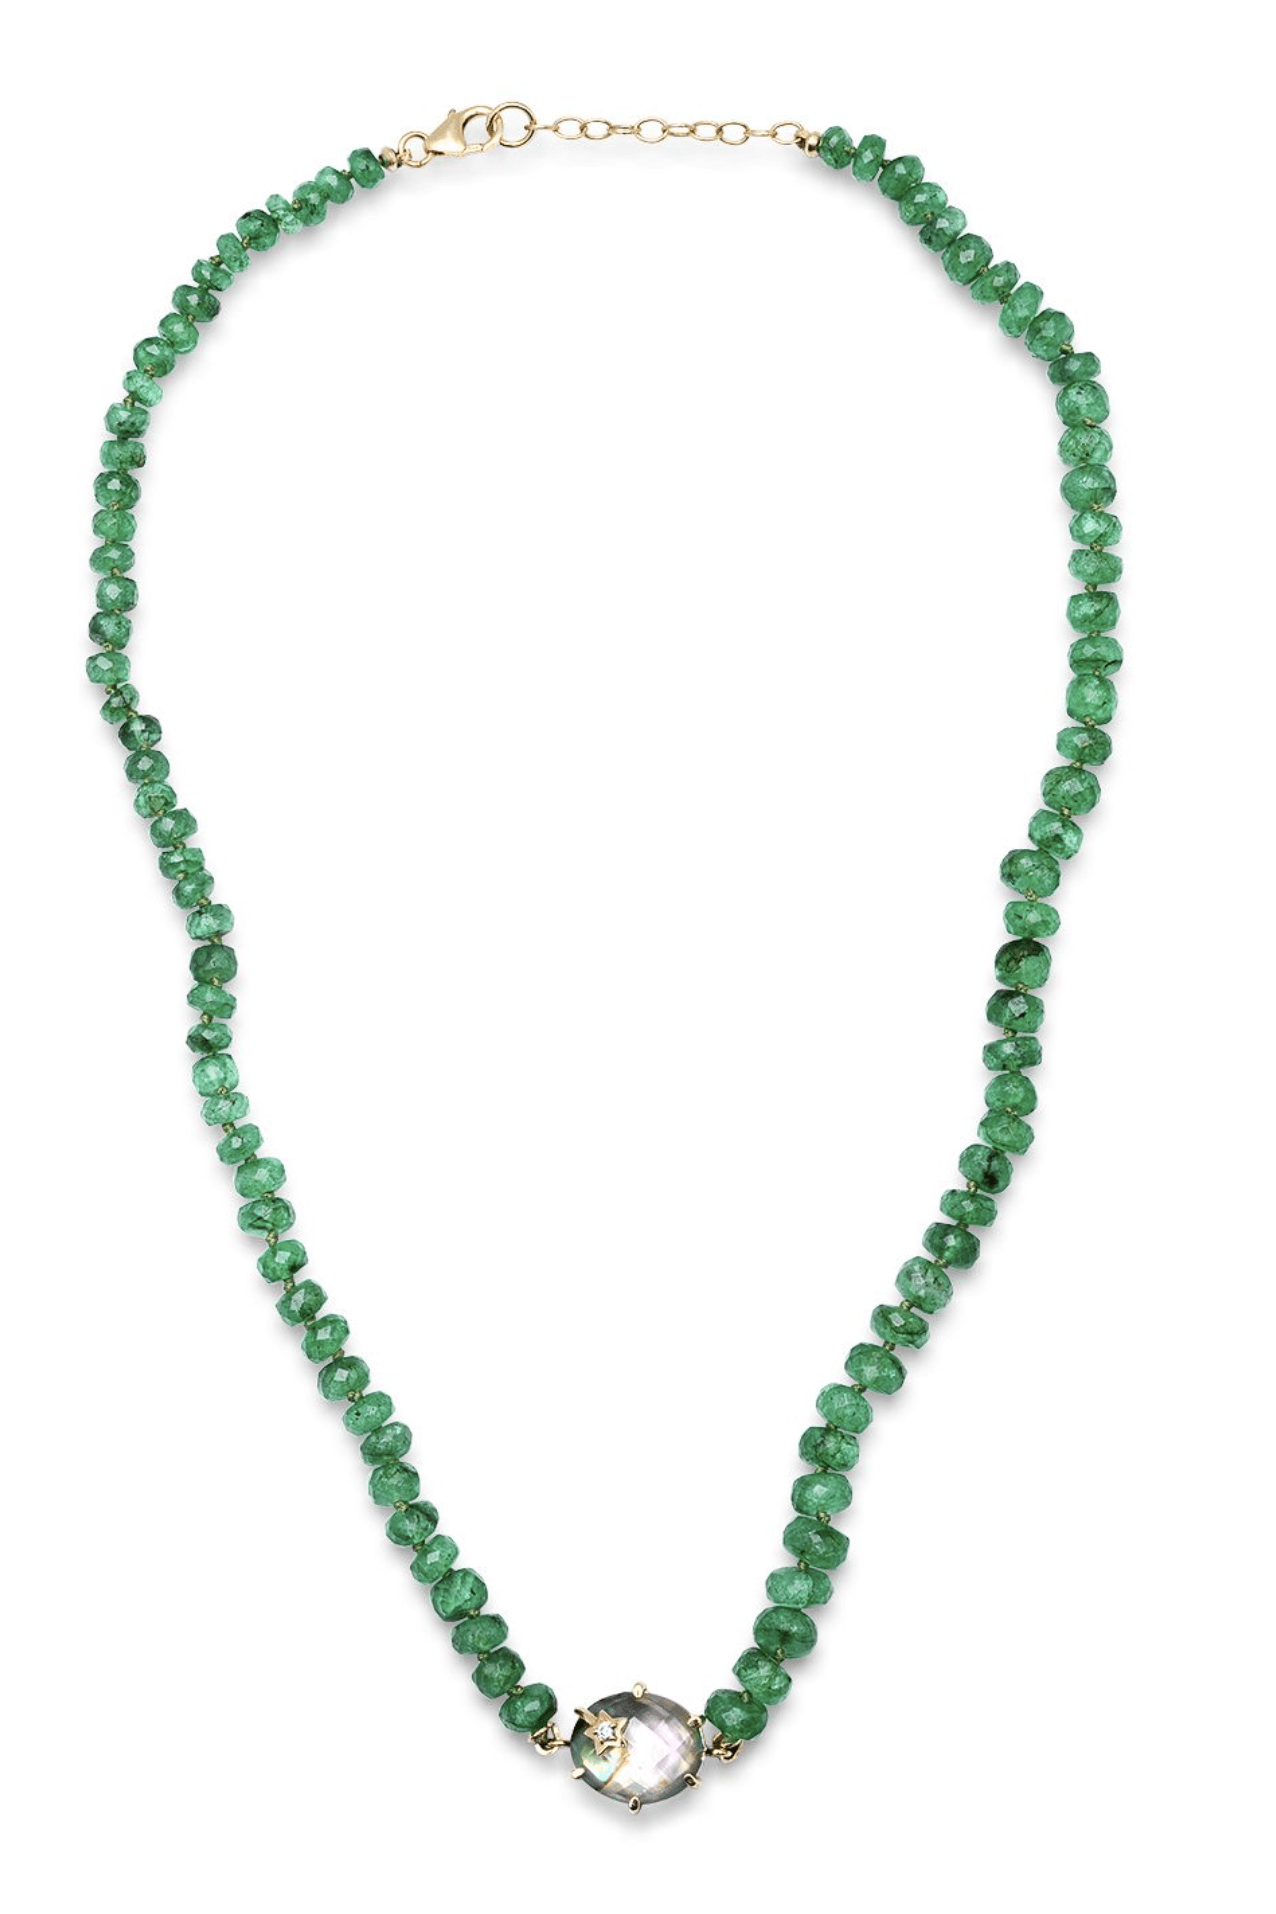 ANDREA FOHRMAN-Mini Galaxy Emerald Bead Necklace-YELLOW GOLD